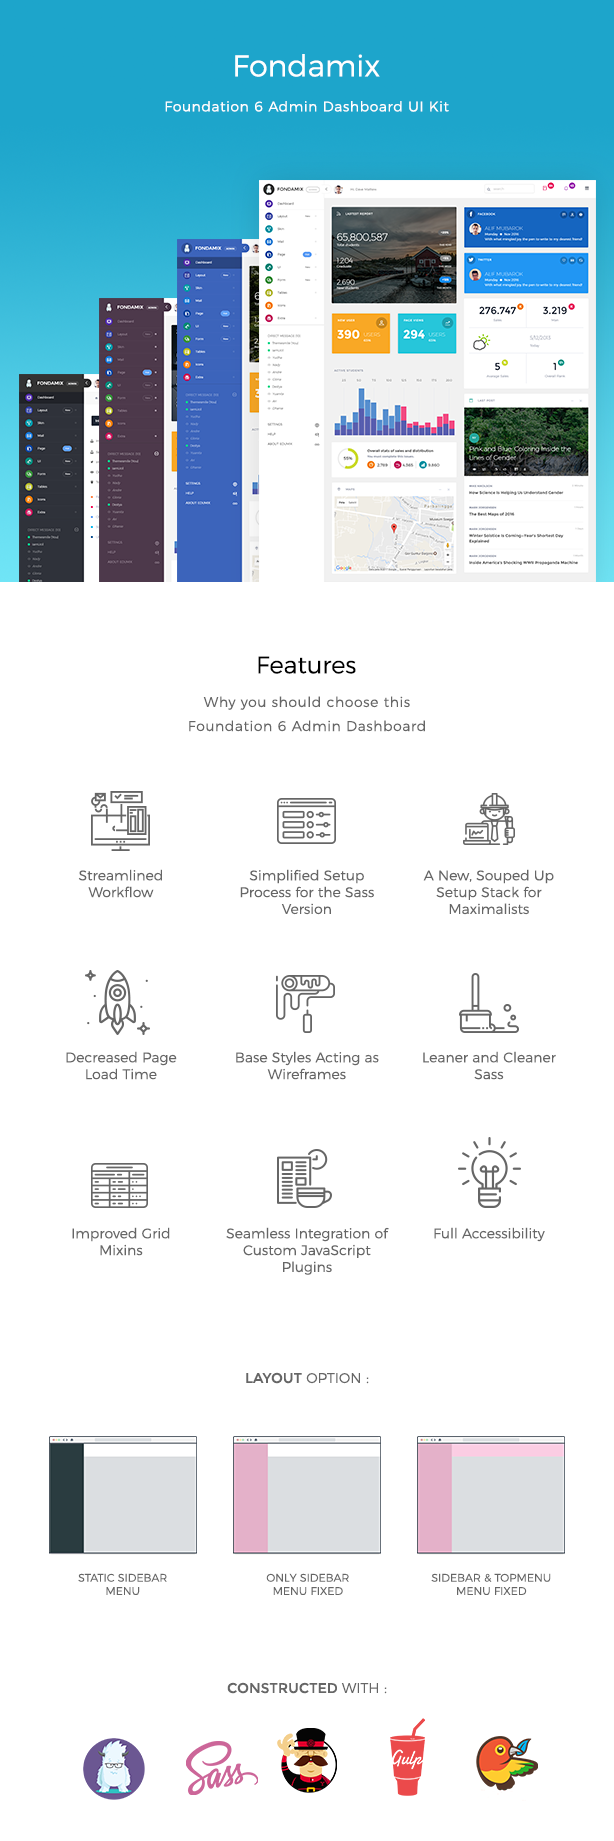 key features1.2 - Foundation 6 Admin Dashboard UI Kits